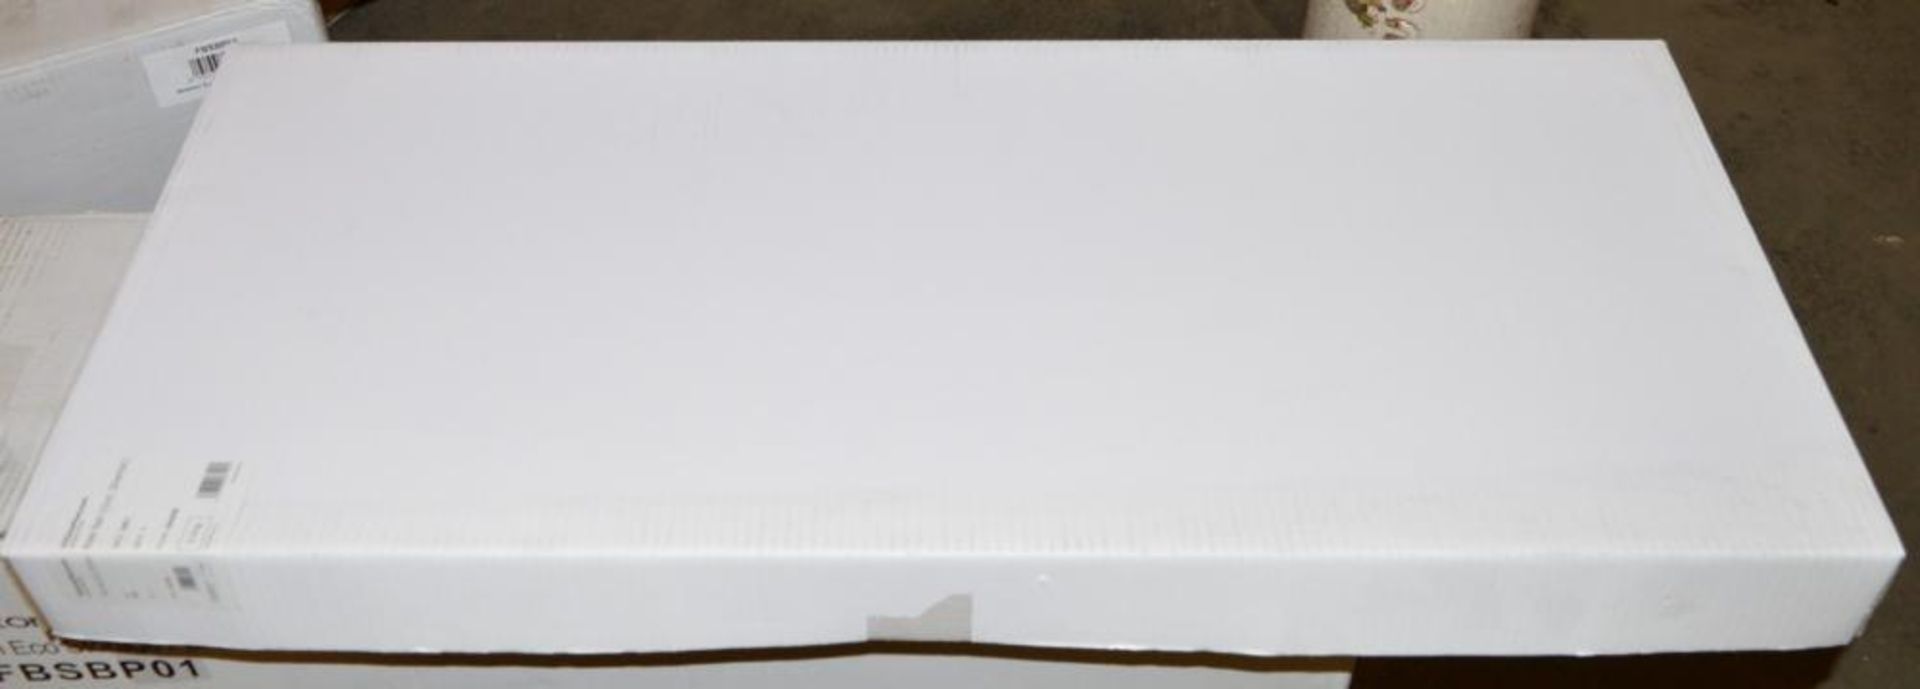 1 x Shower Riser Rail + H900 - Chrome Finish - Brand New Boxed Stock - Ref S206-1 - CL190 - - Image 3 of 5